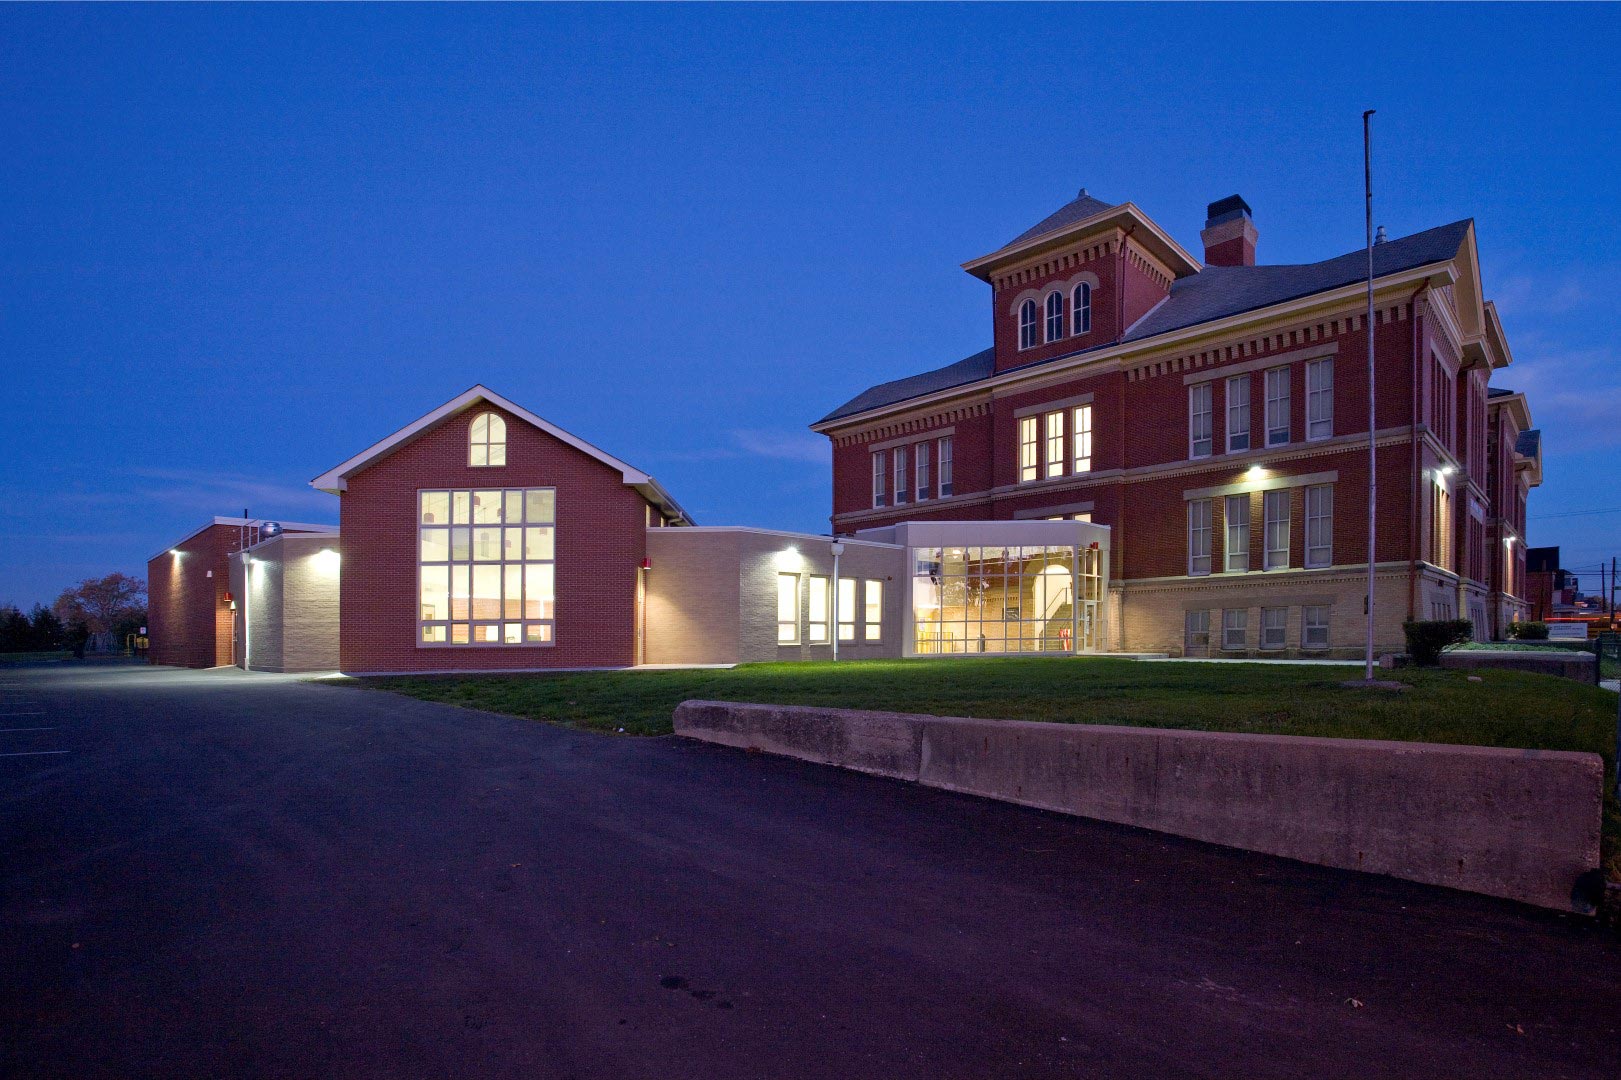 Ohio Avenue Elementary School, Exterior of historic building at night